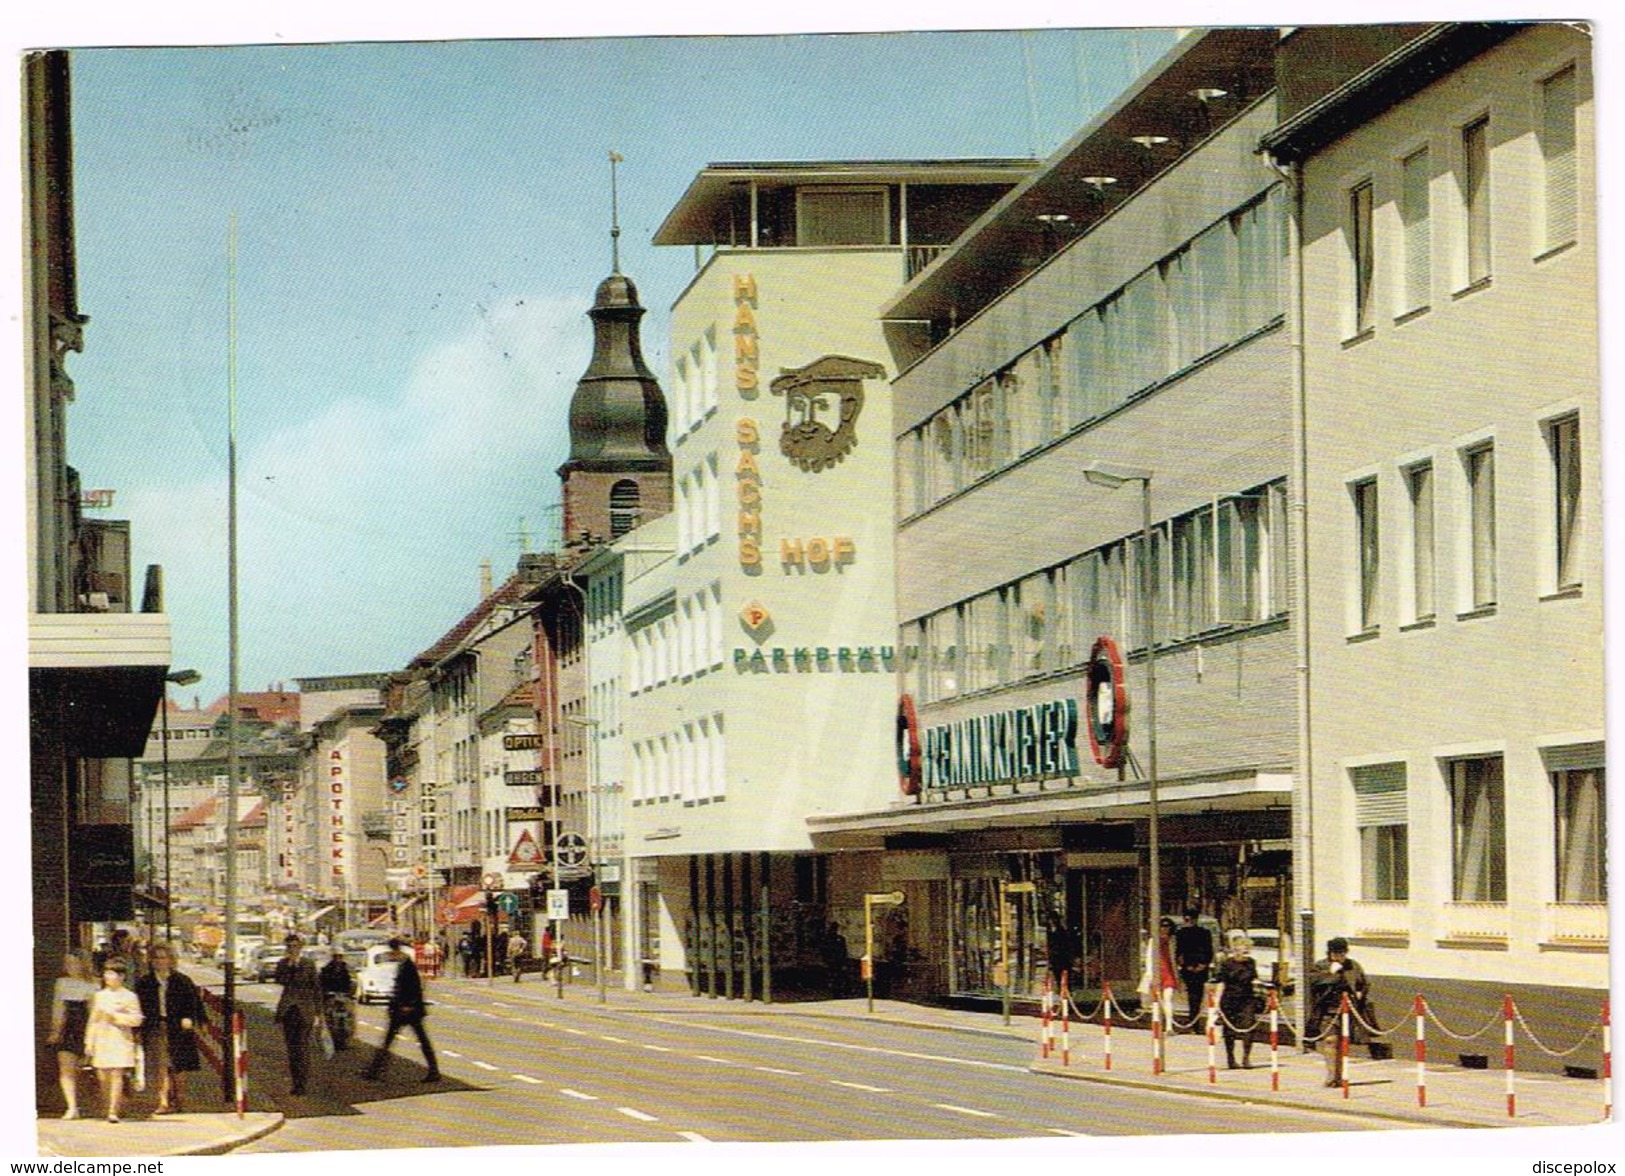 T1425 Pirmasens Pfalz - Schlossstrasse Mit Hans Sachs Hof / Viaggiata 1979 - Pirmasens